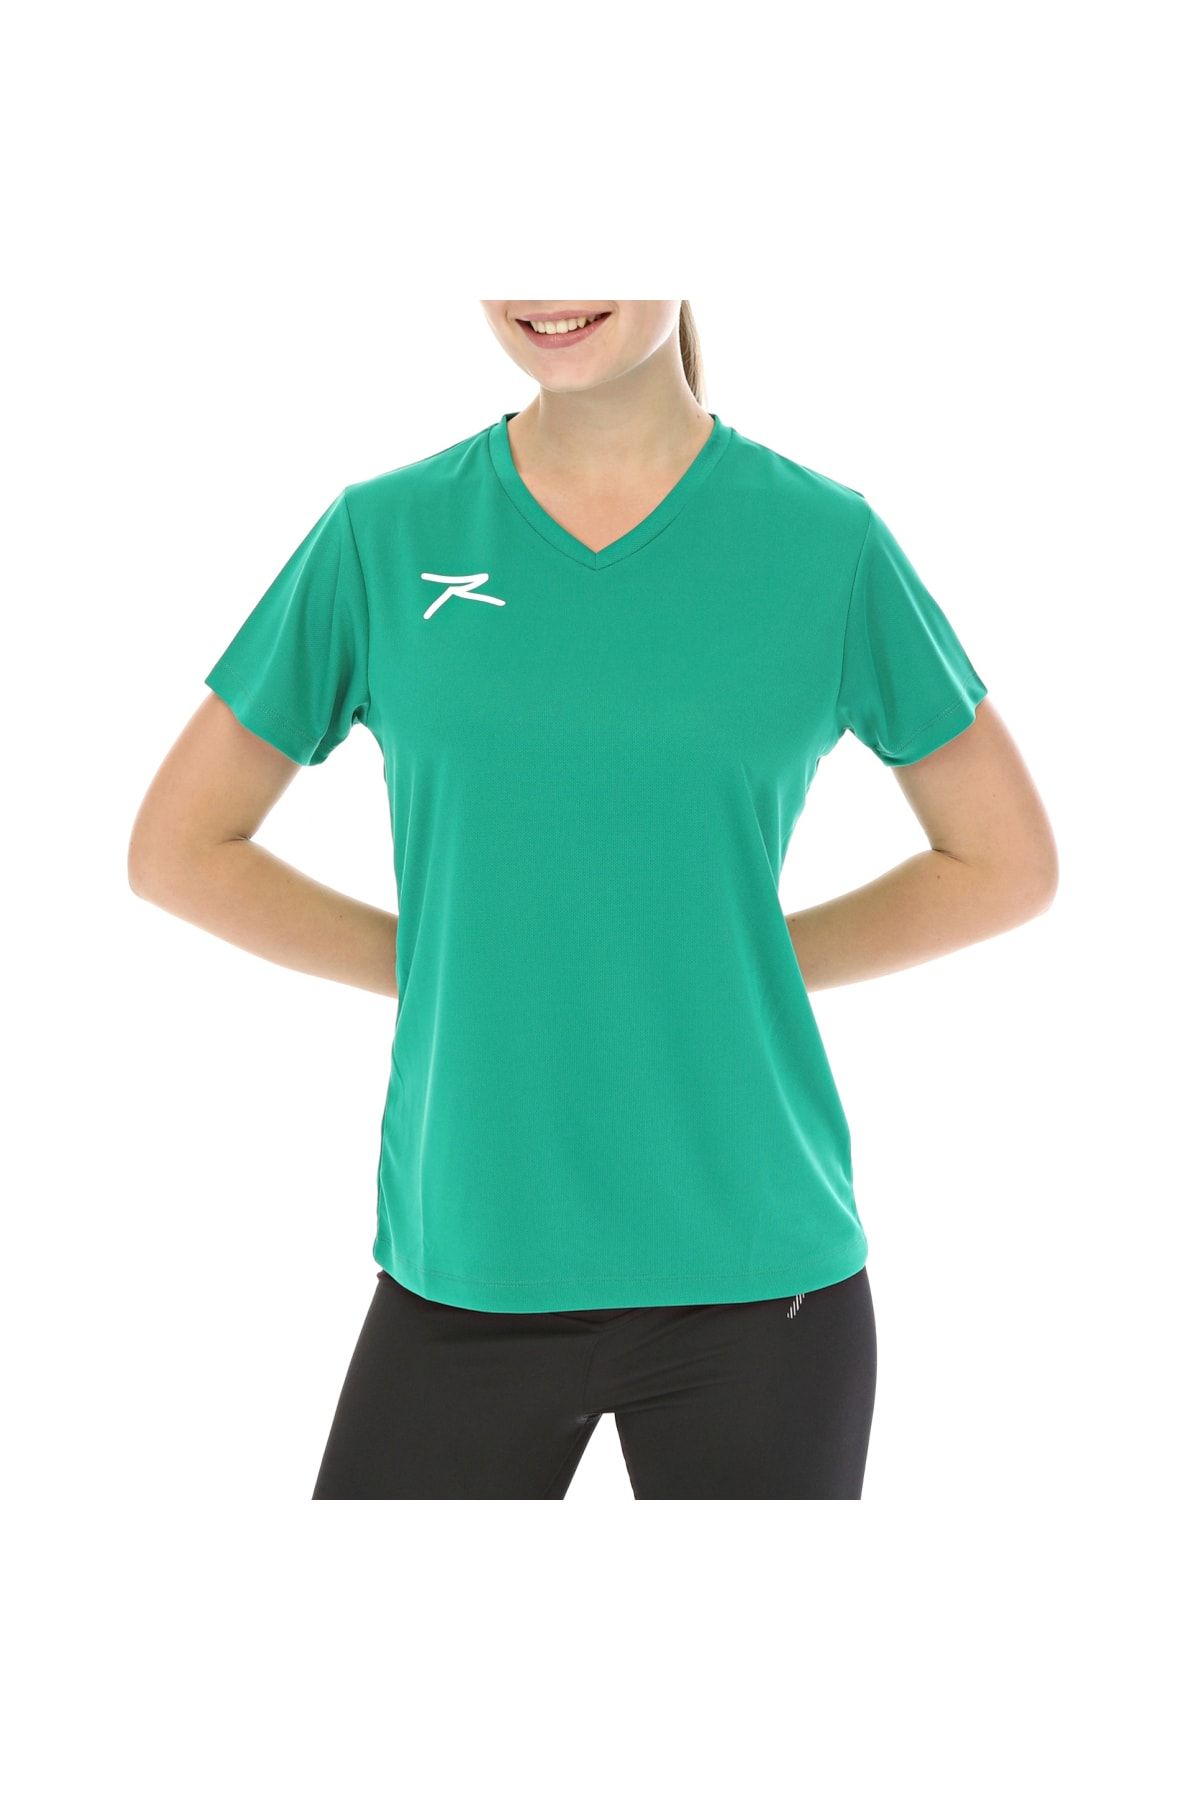 raru Kadın T-shirt Venus Yeşil